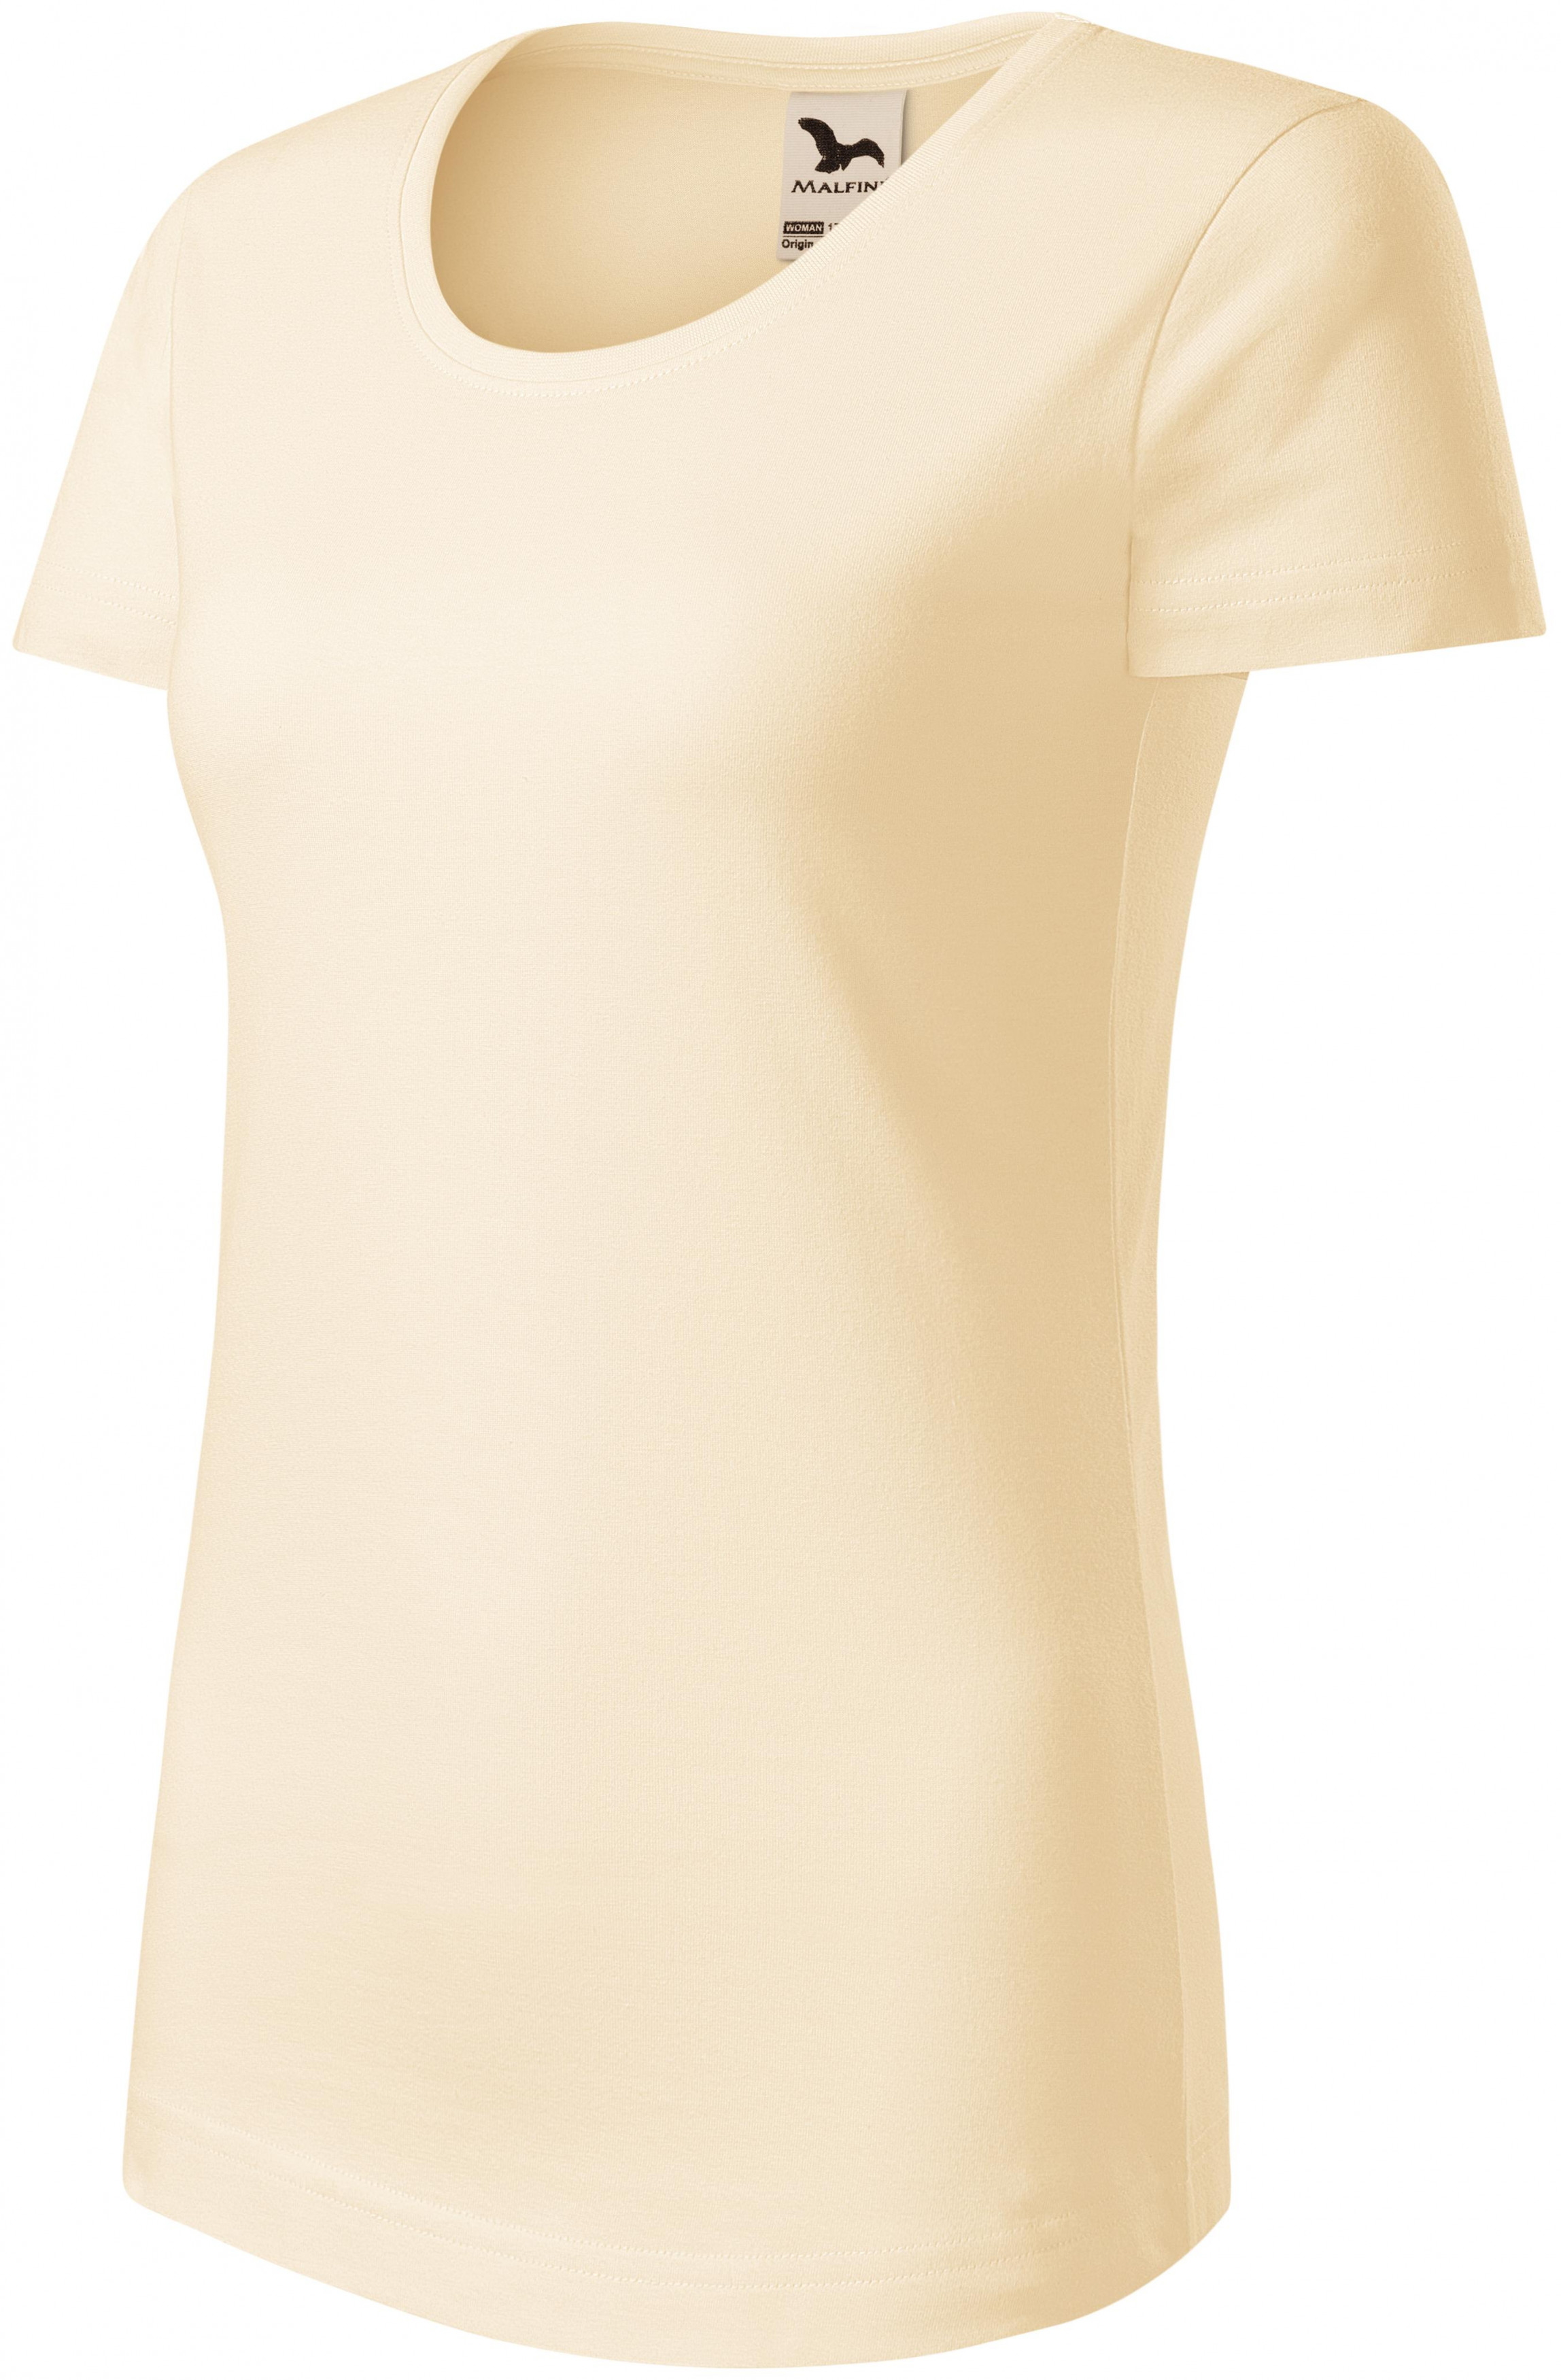 Dámske tričko, organická bavlna, mandľová, XL